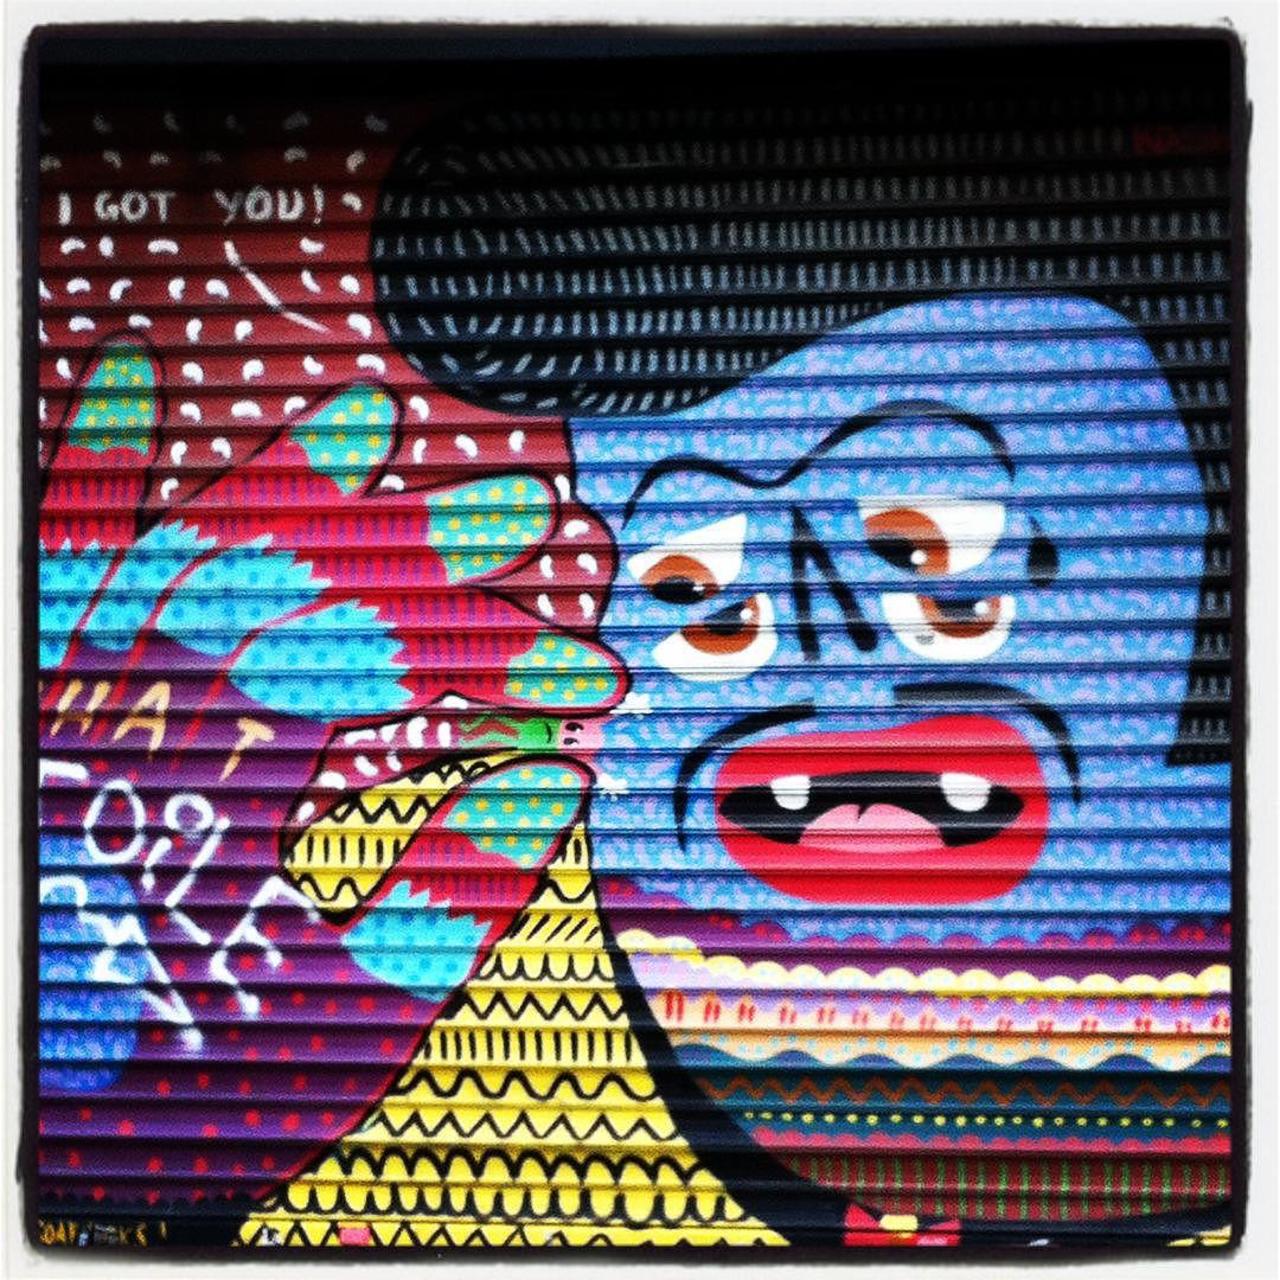 circumjacent_fr: #Paris #graffiti photo by ttestelle http://ift.tt/1KgbrXN #StreetArt http://t.co/ZwOPidfrly